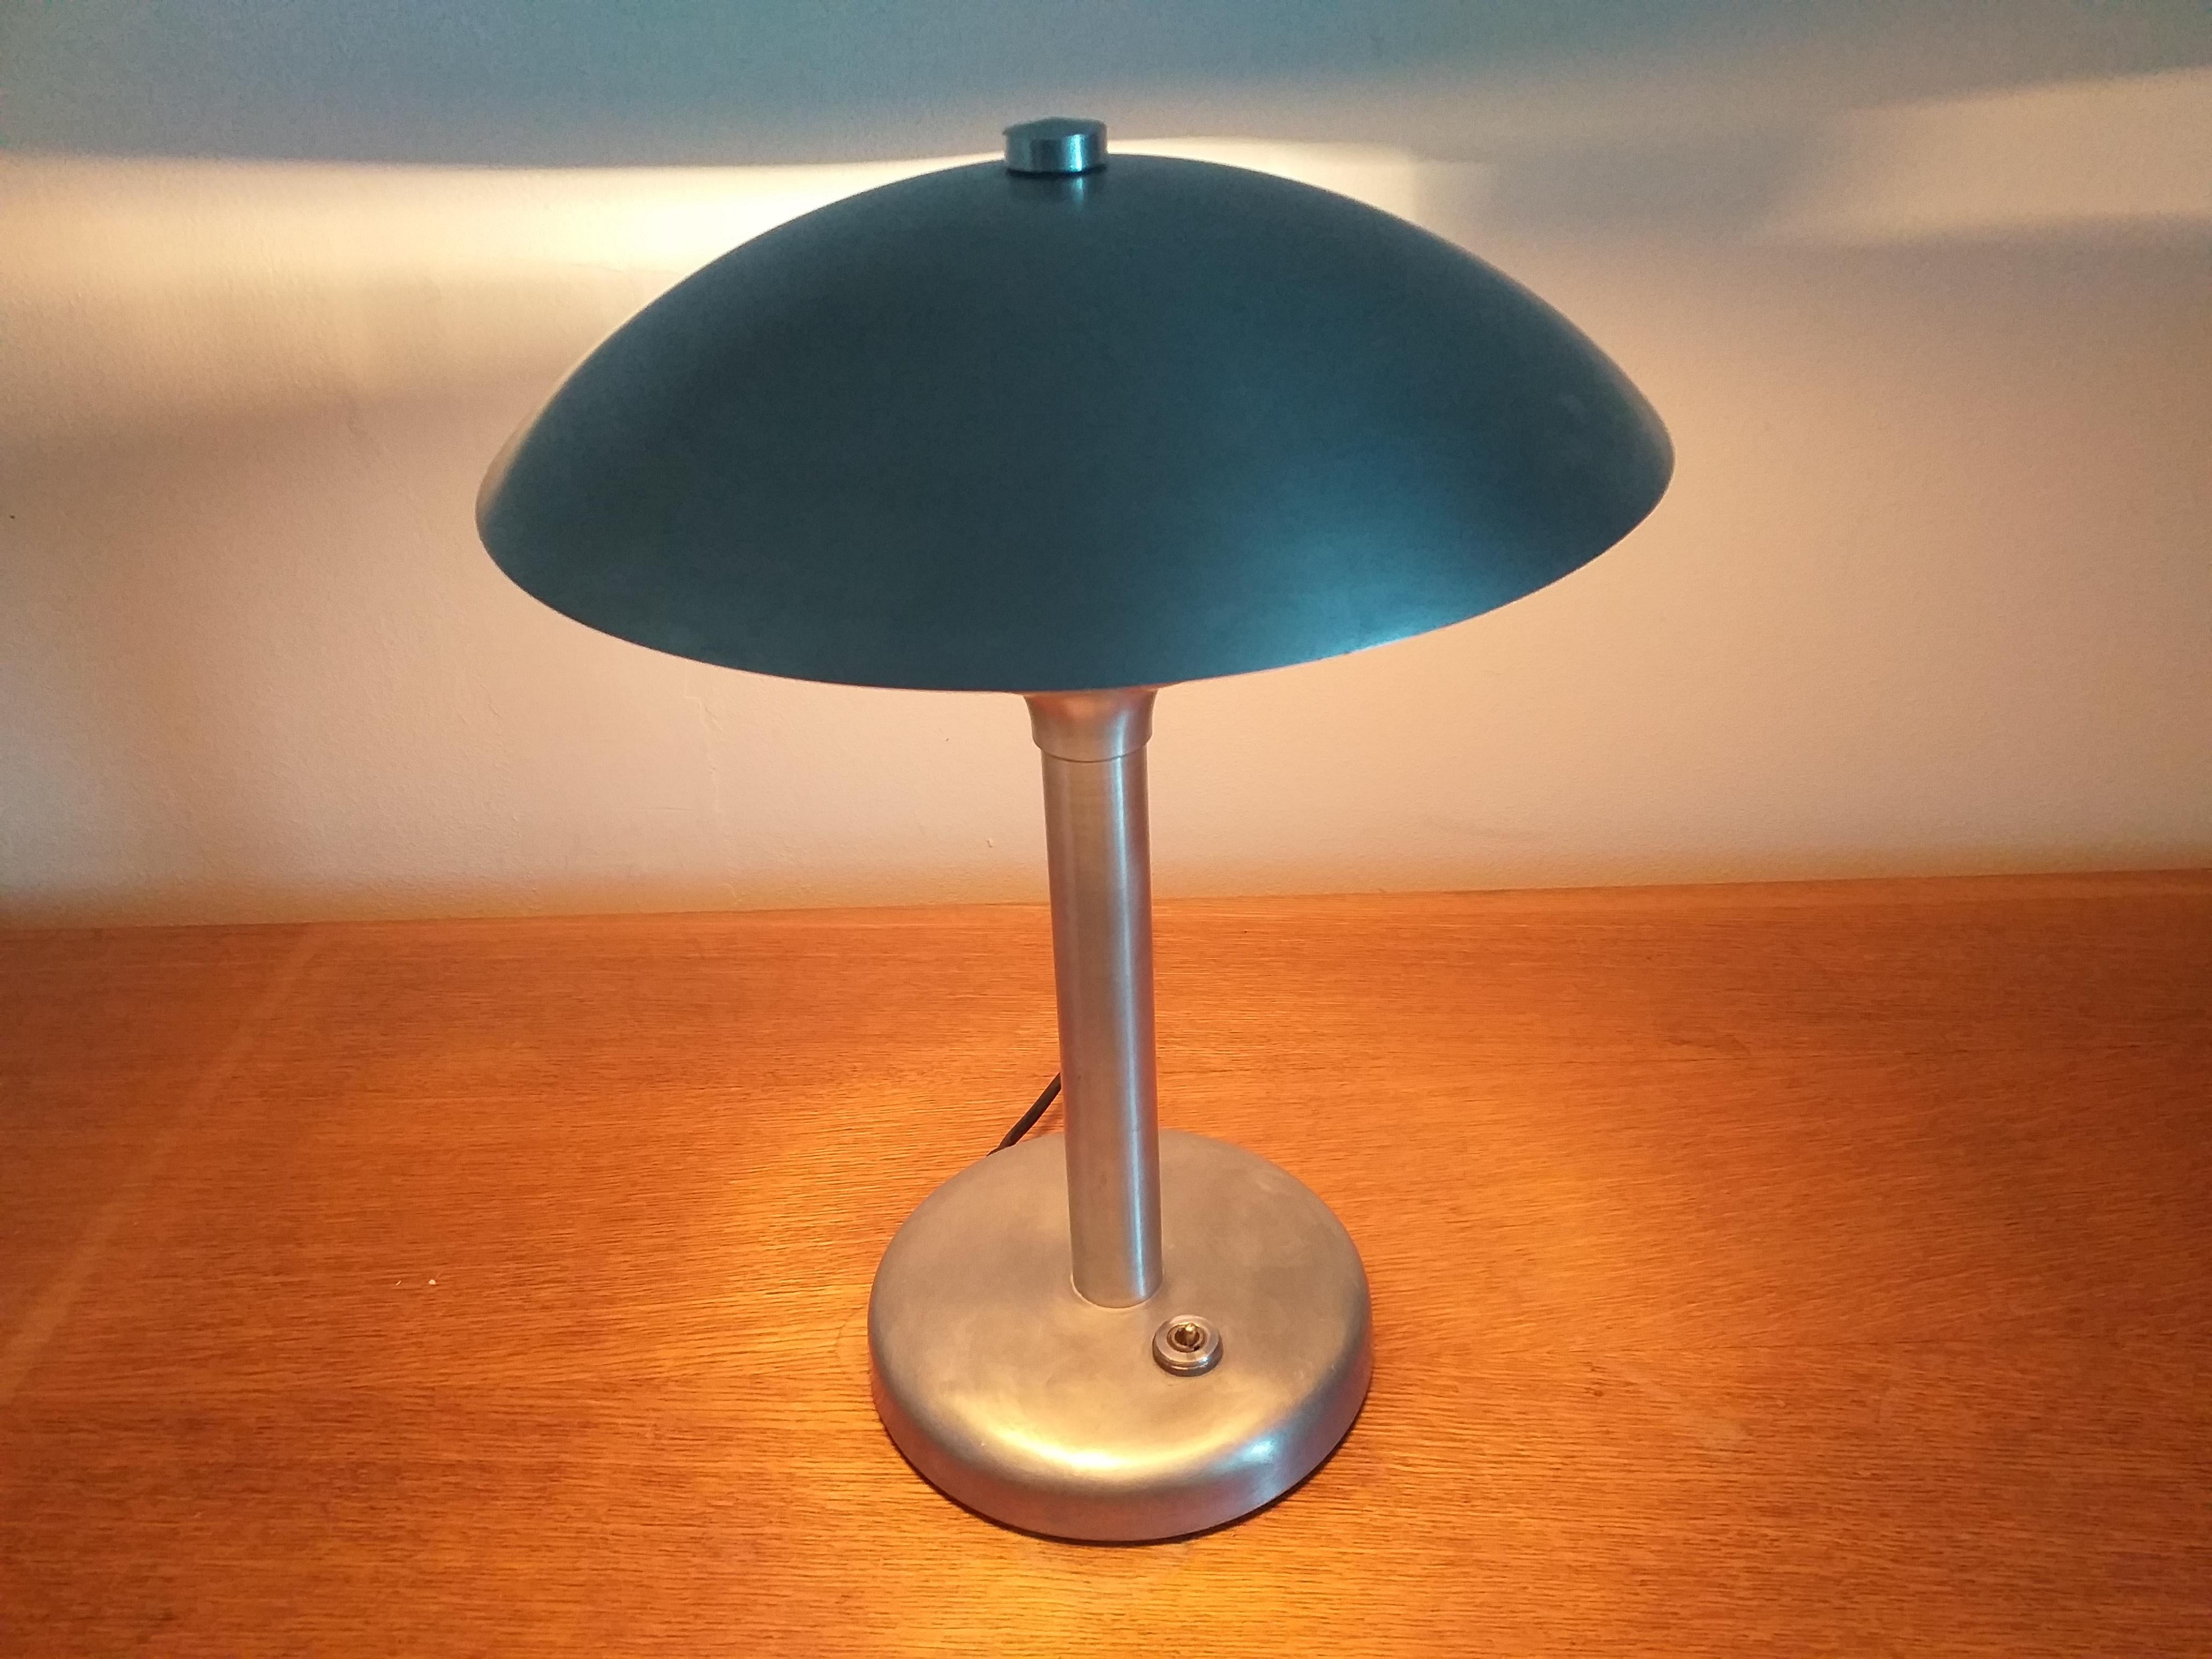 Art Deco Table Lamp, Franta Anyz, Functionalism, Bauhaus, 1930s 1